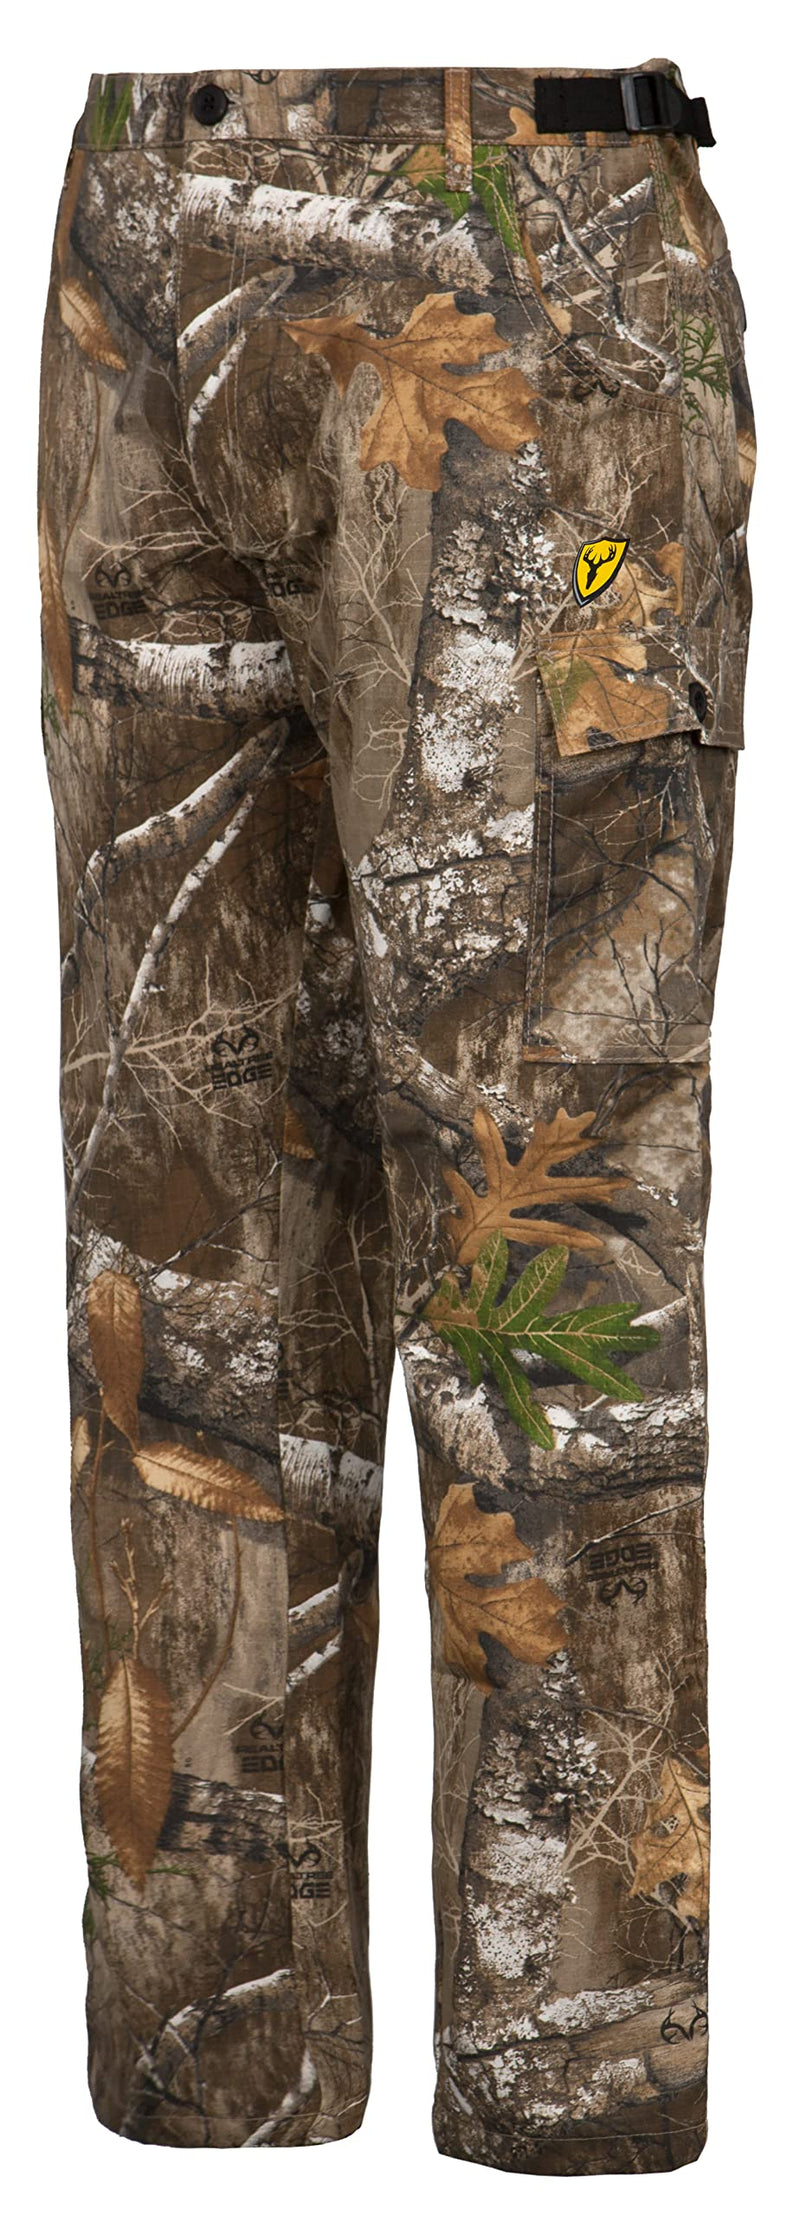 Scent Blocker Shield Series Fused Cotton Pants, Hunting Pants for Men (Realtree Edge, 3X-Large)